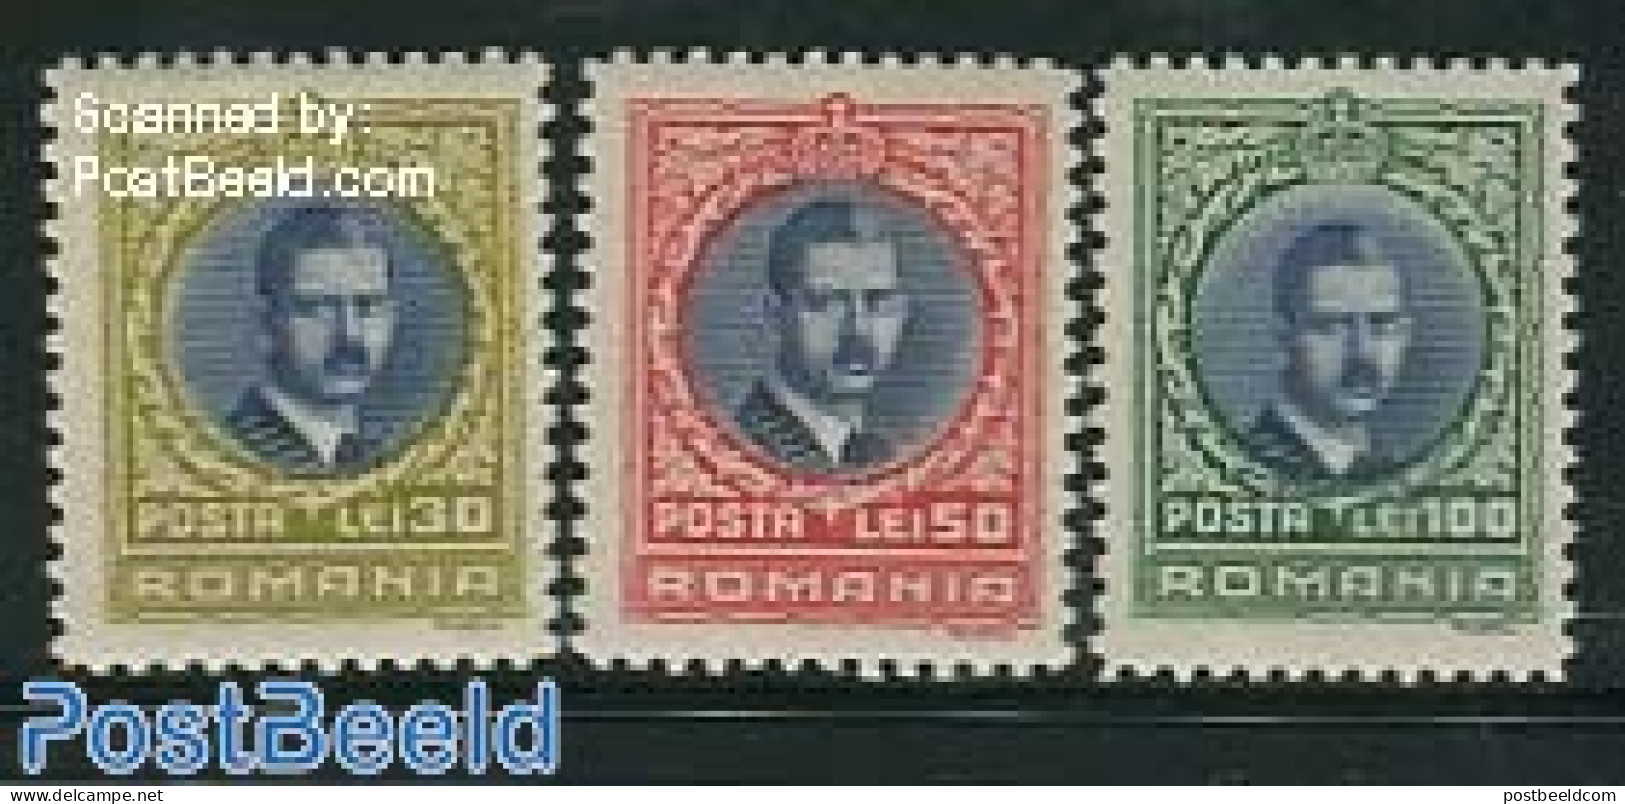 Romania 1931 Definitives 3v, Mint NH - Nuevos